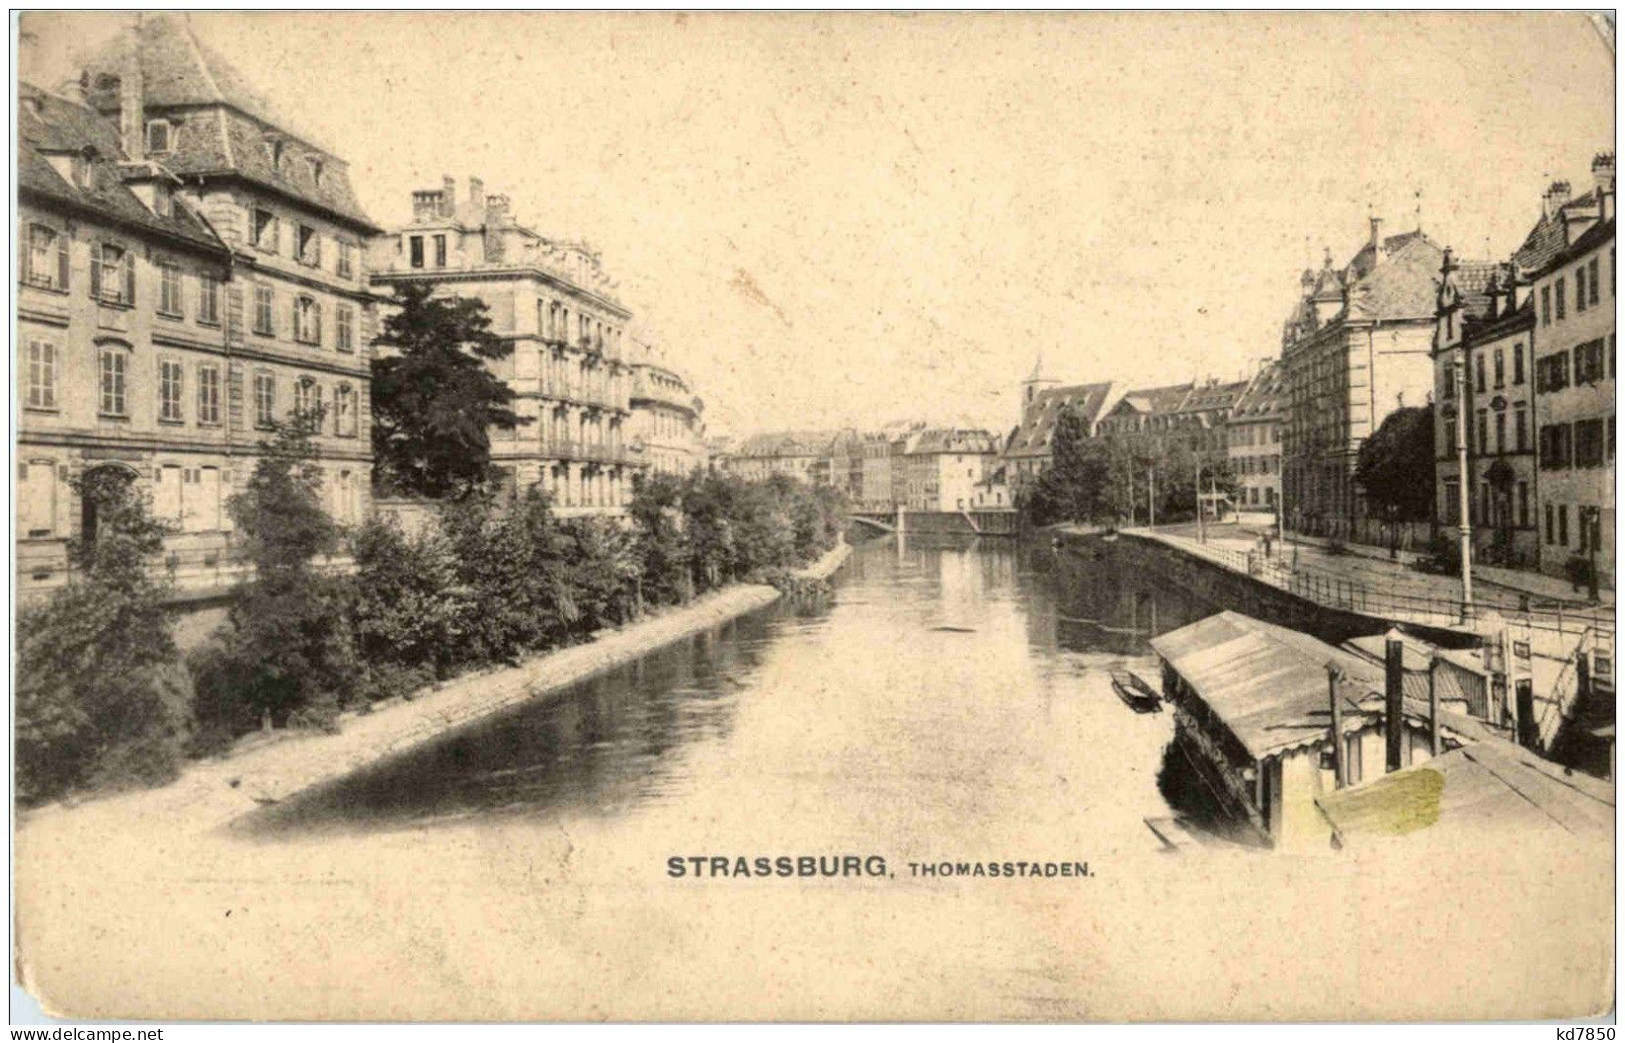 Strassburg - Thomasstaden - Strasbourg